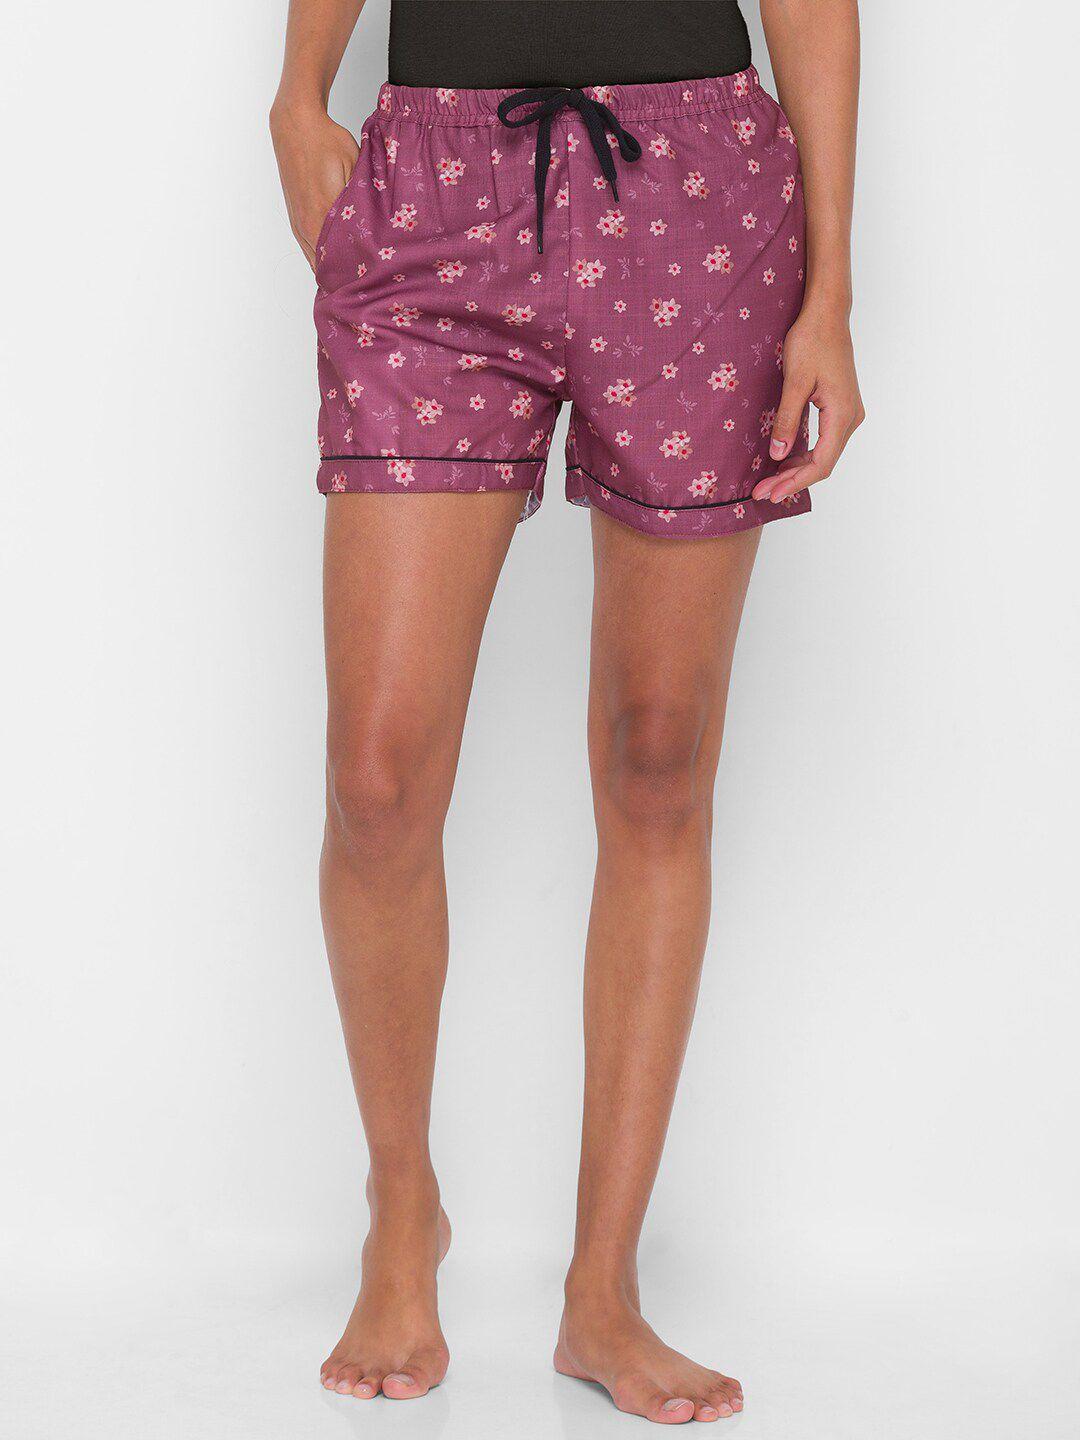 fashionrack-women-purple-&-black-printed-lounge-shorts